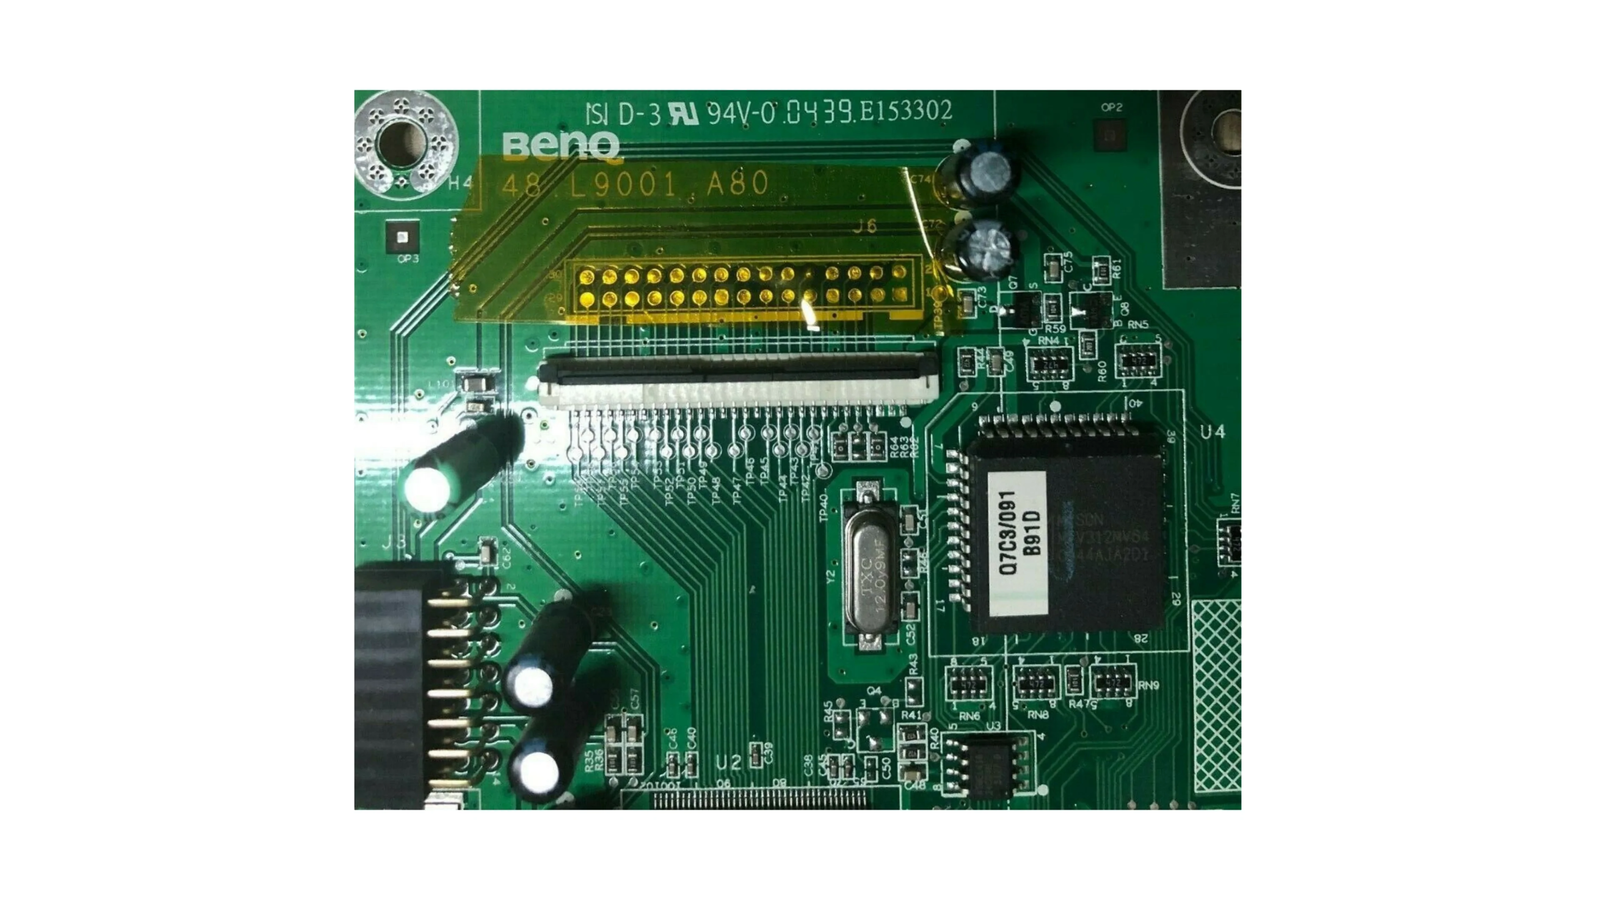 Benq 48.L9001.A80 driver board